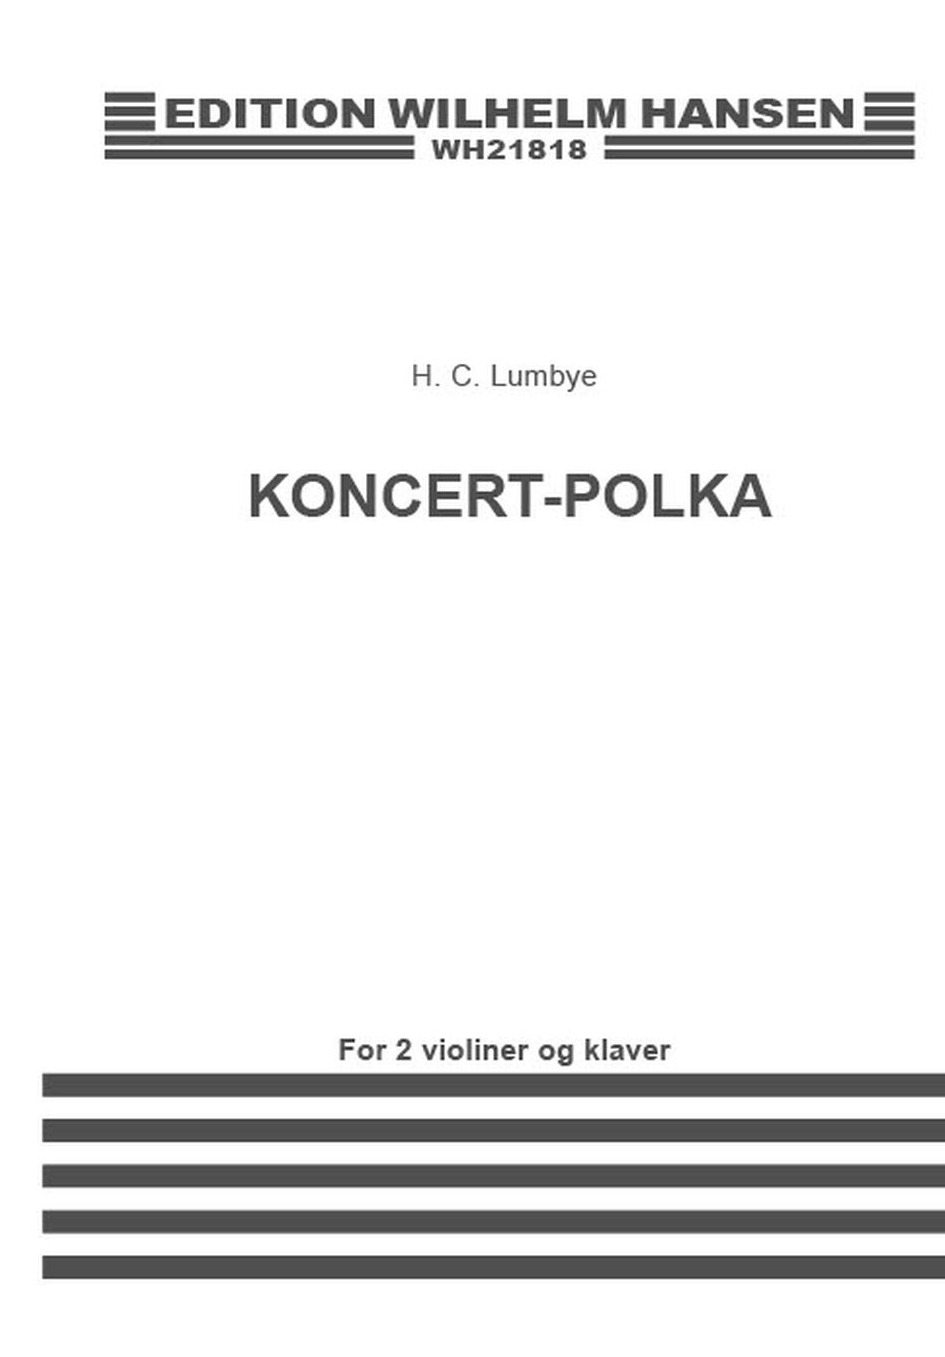 Hans Christian Lumbye: Concert-Polka